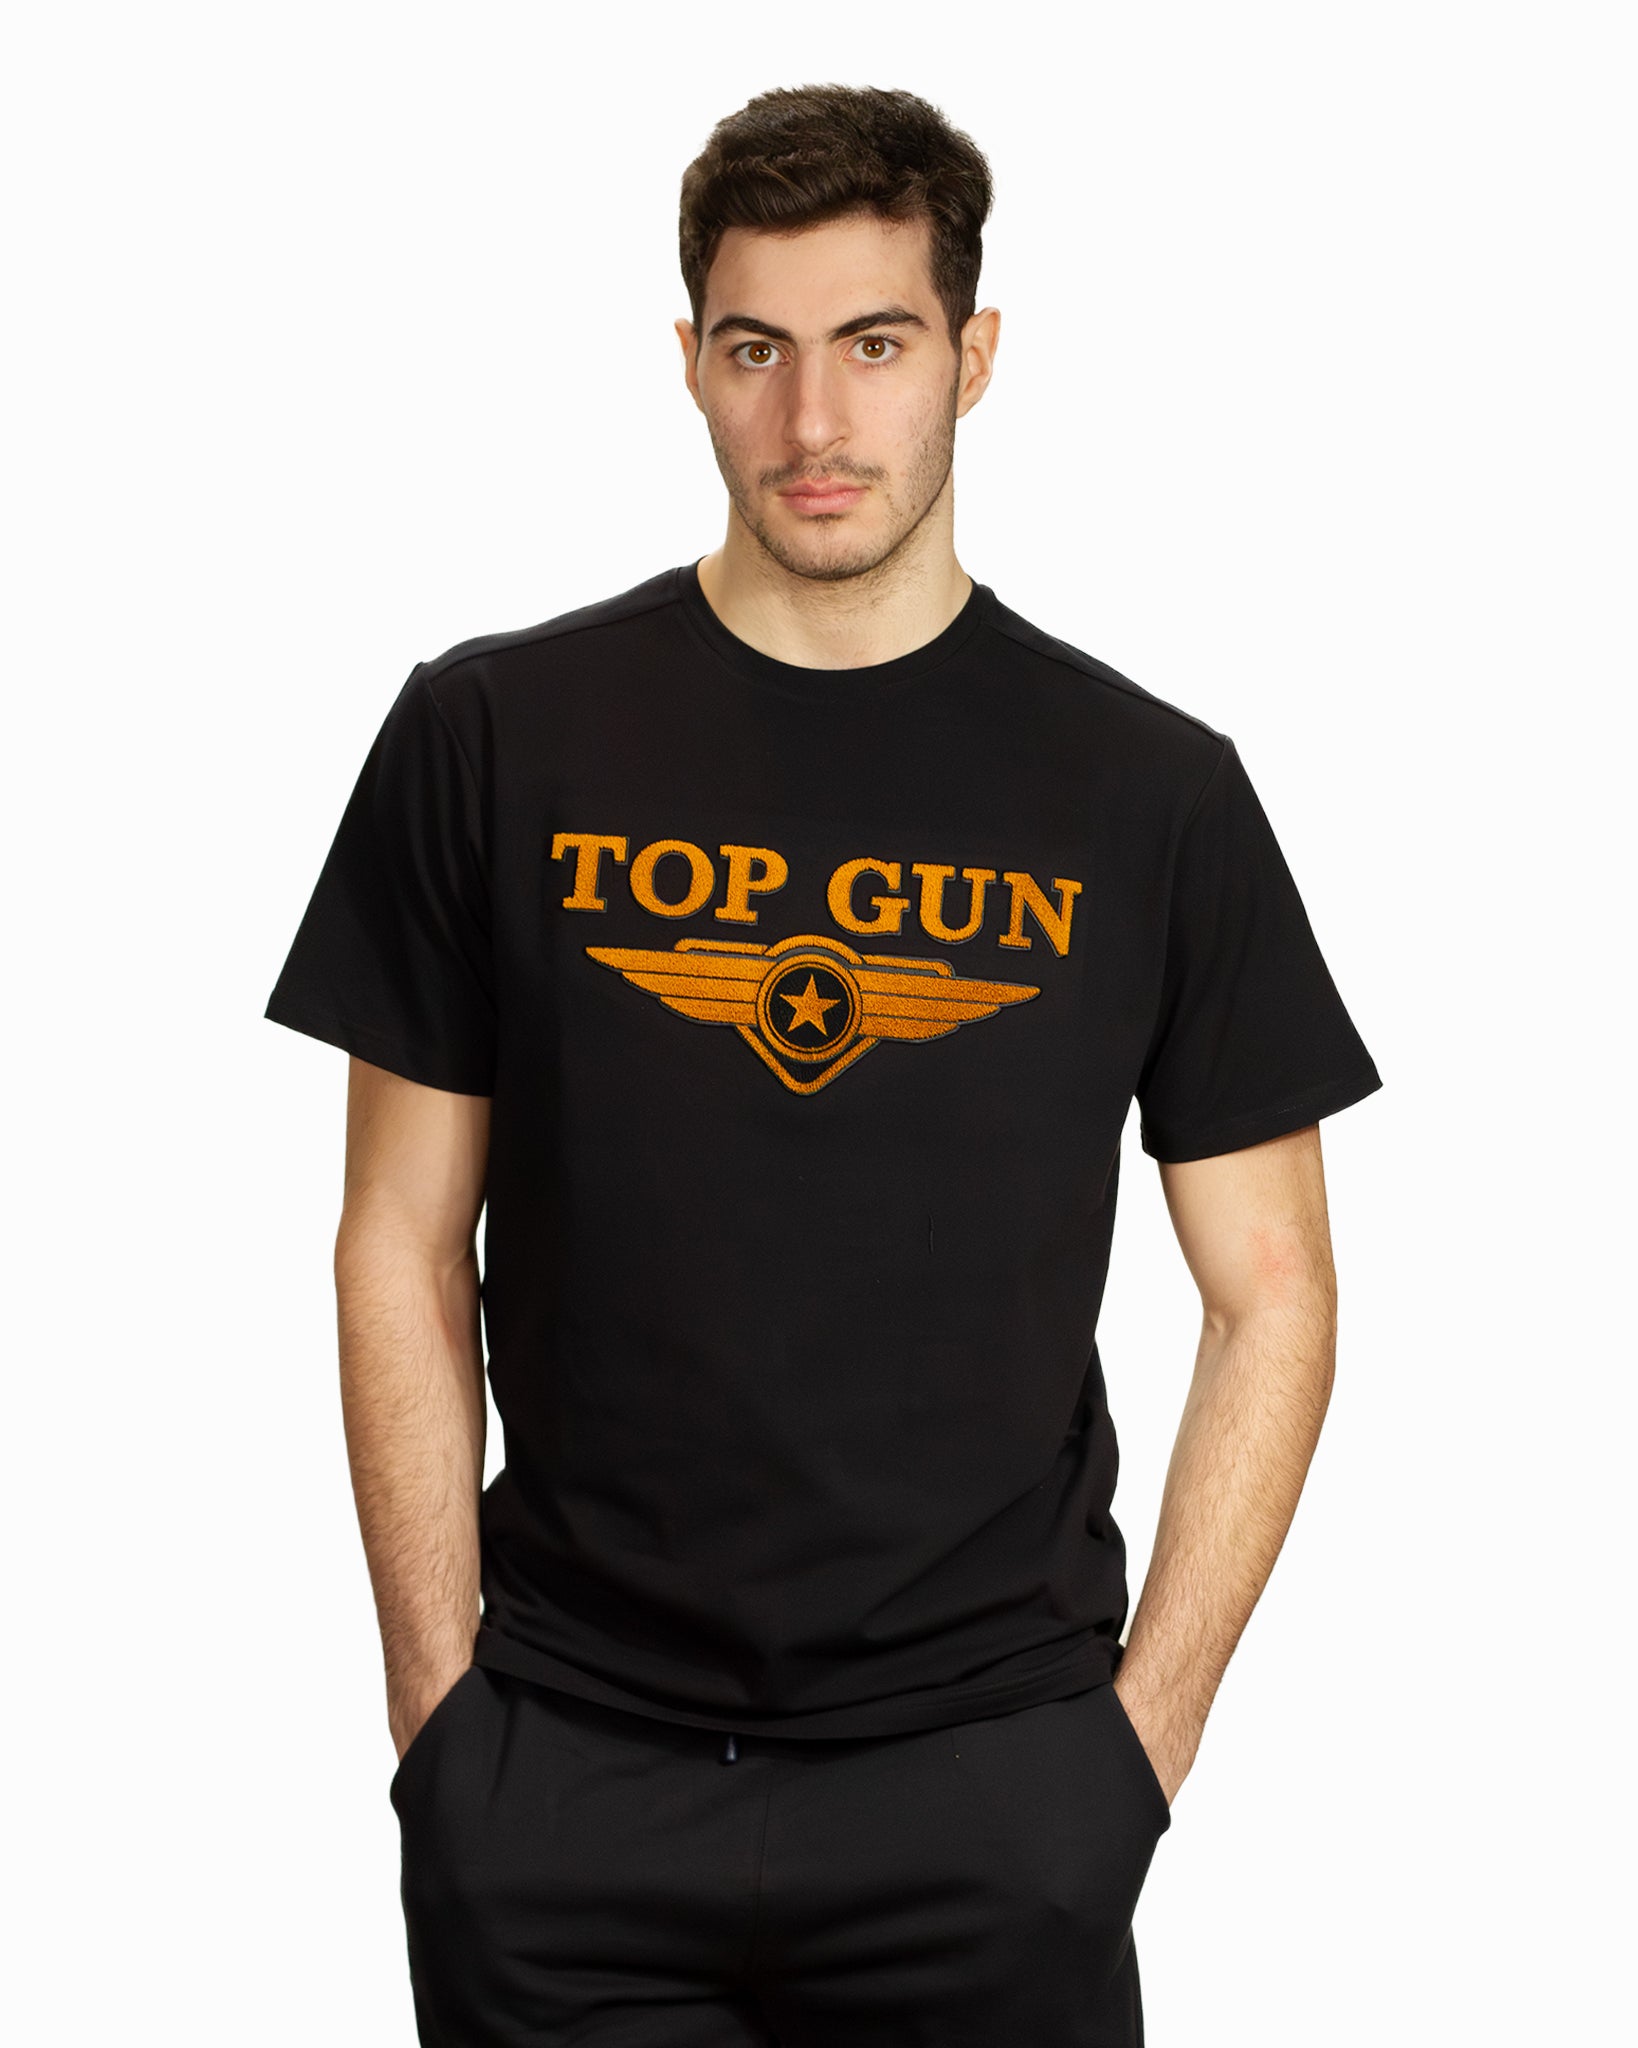 TOP GUN® EMBROIDERED Store TOP Clothing | LOGO GUN Top – T-shirts GUN TEE | TOP Original Gun